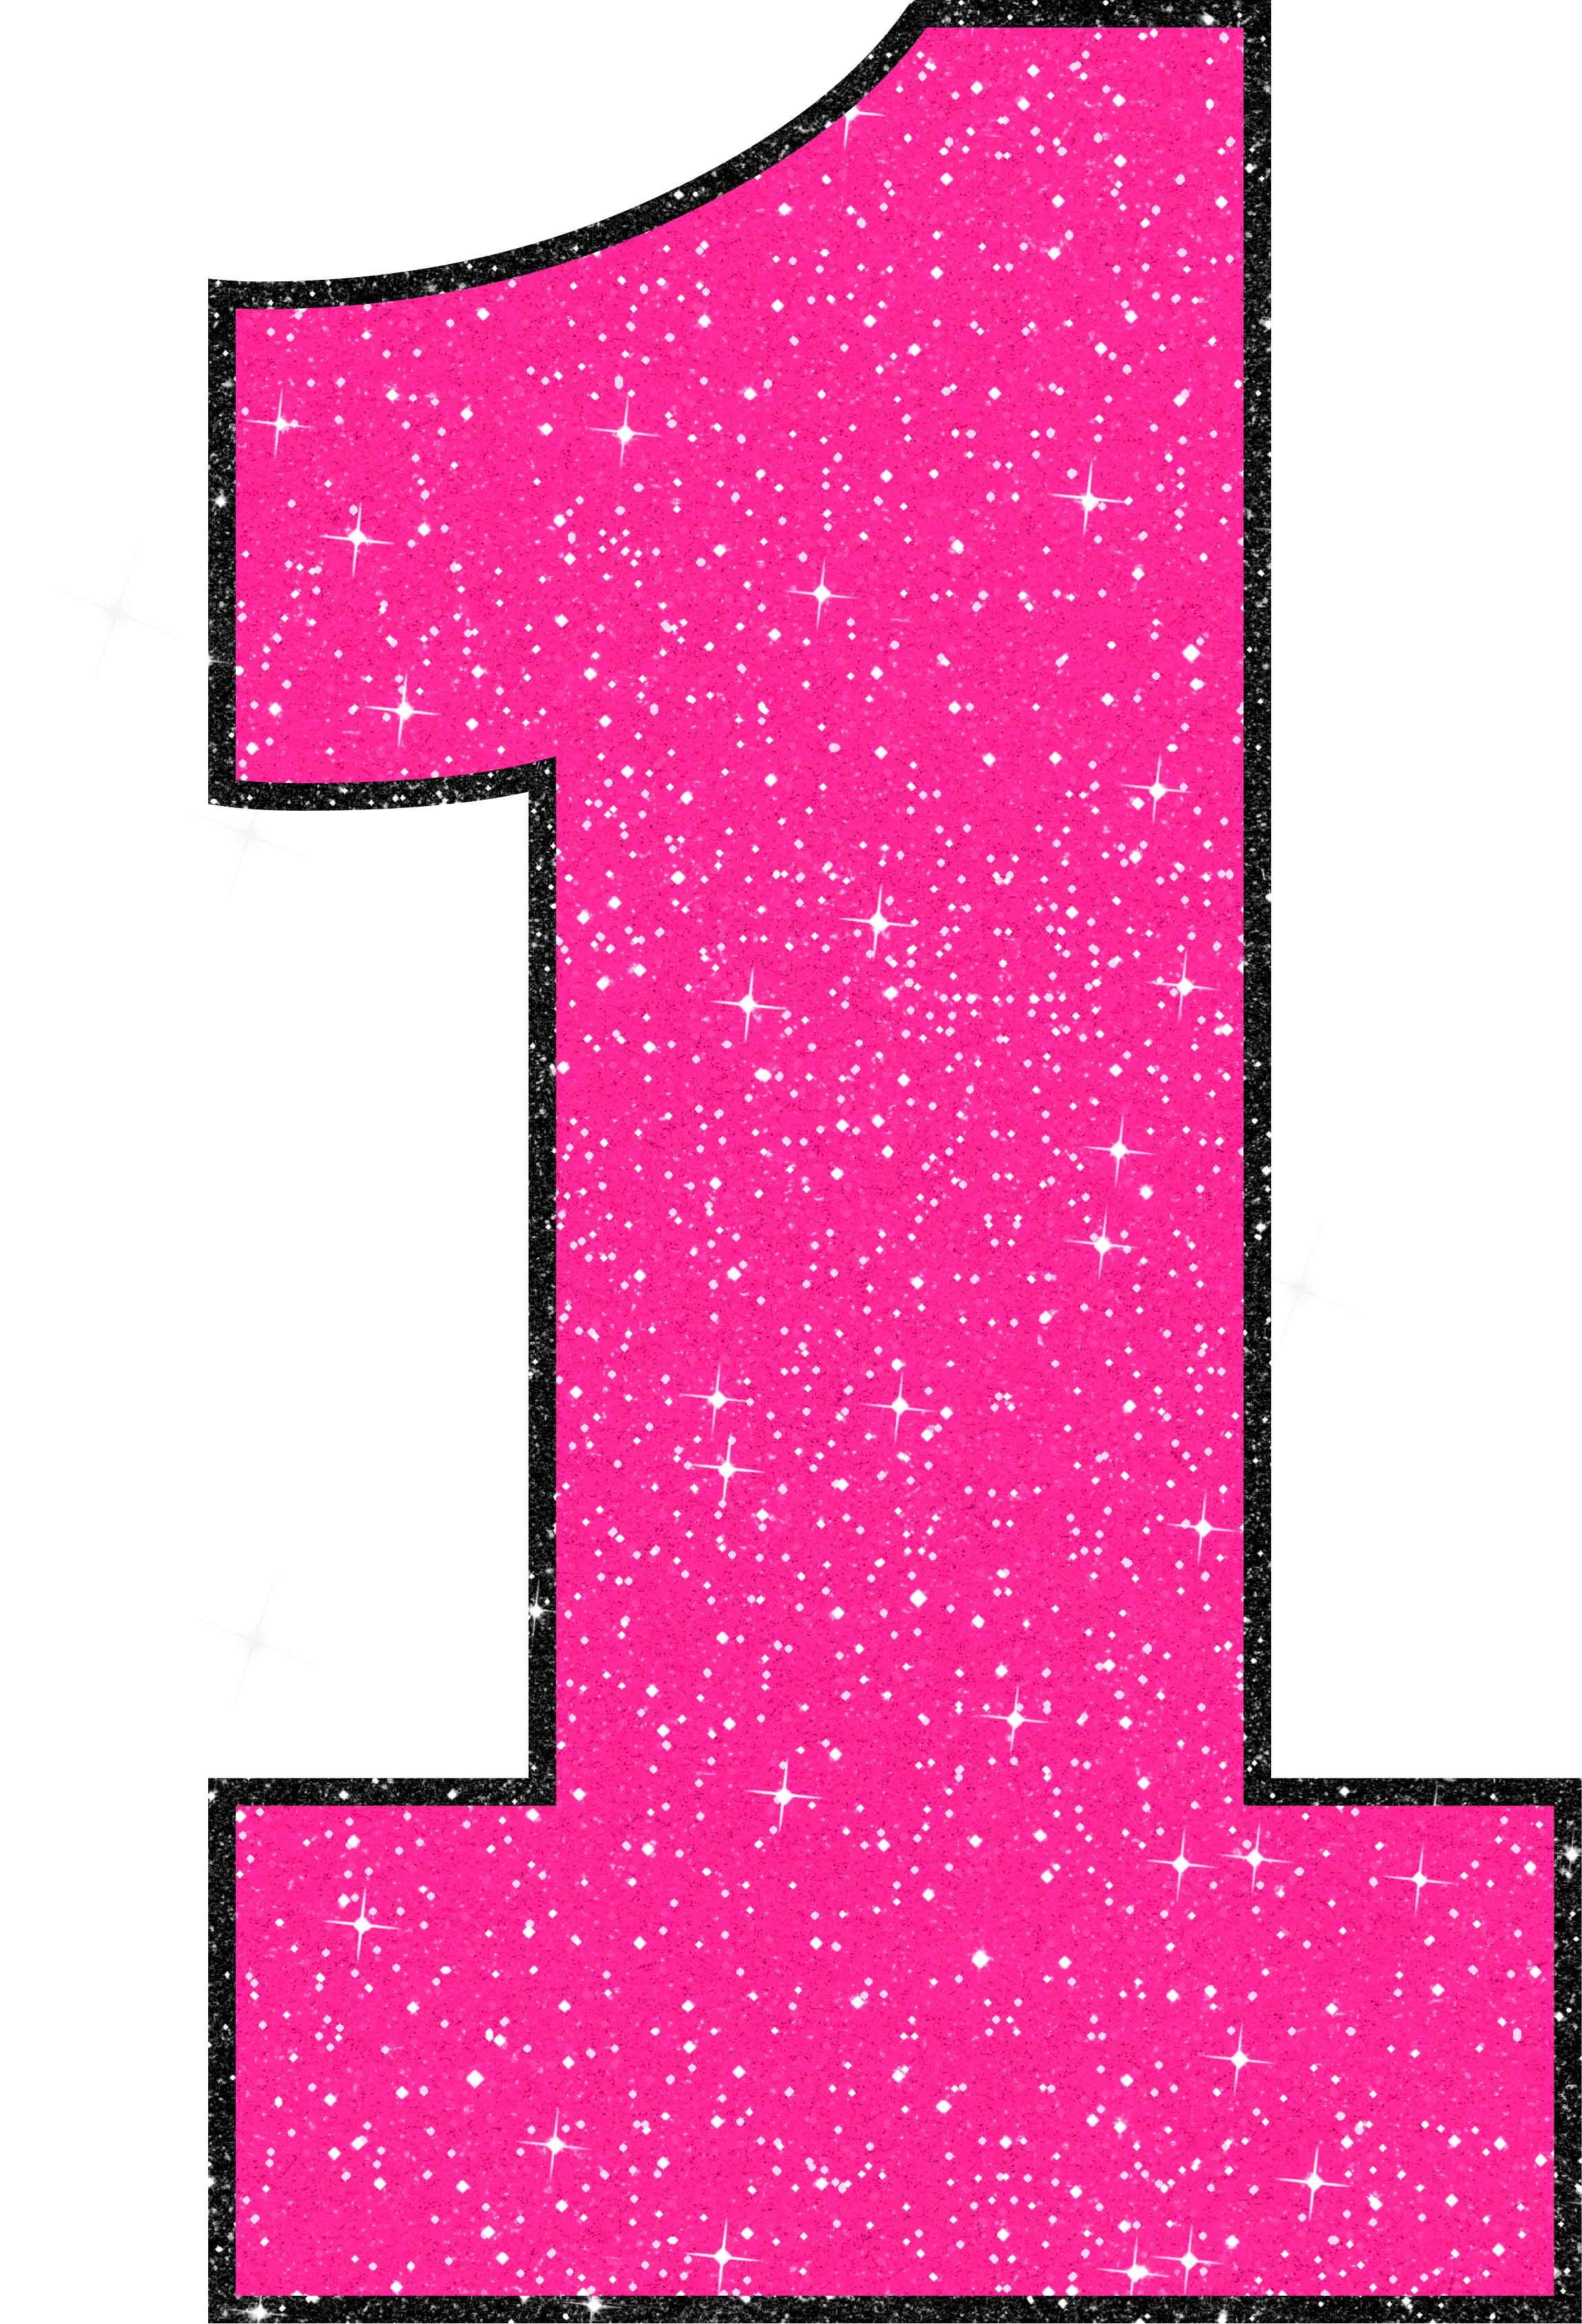 pink glitter number 1